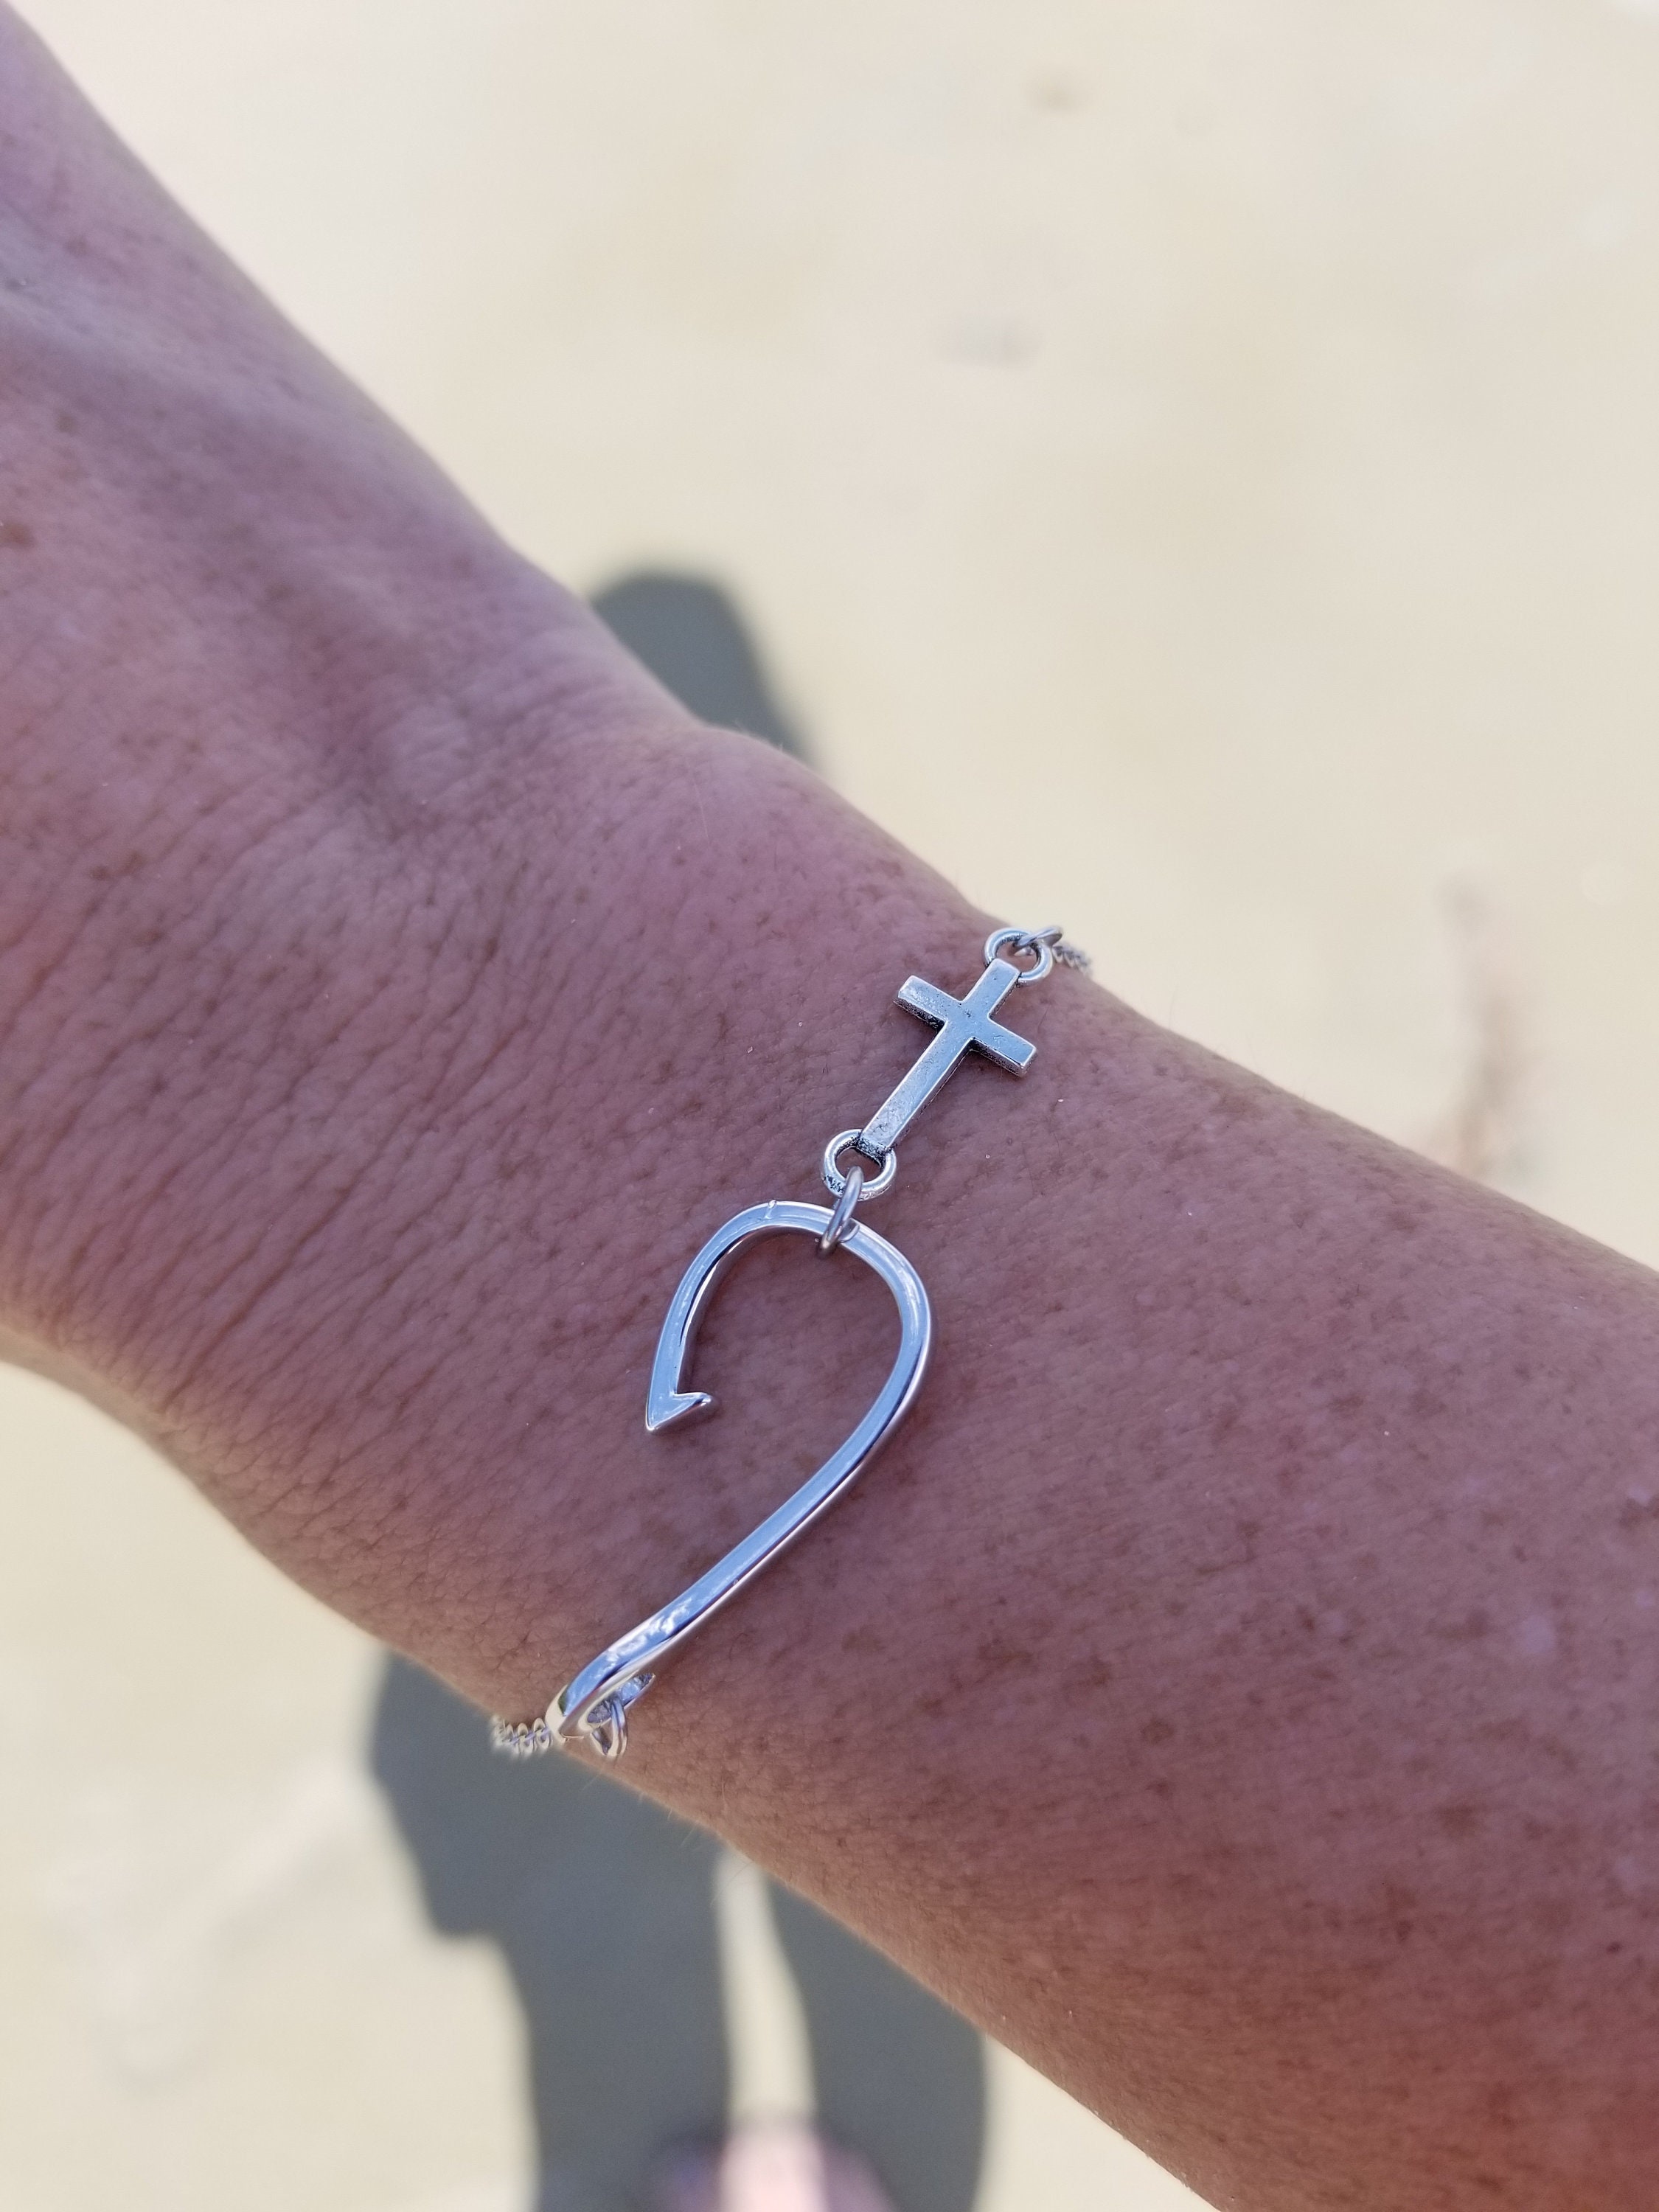 Cross Bracelet With Fish Hook Charm, Christian Jewelry, Fishing